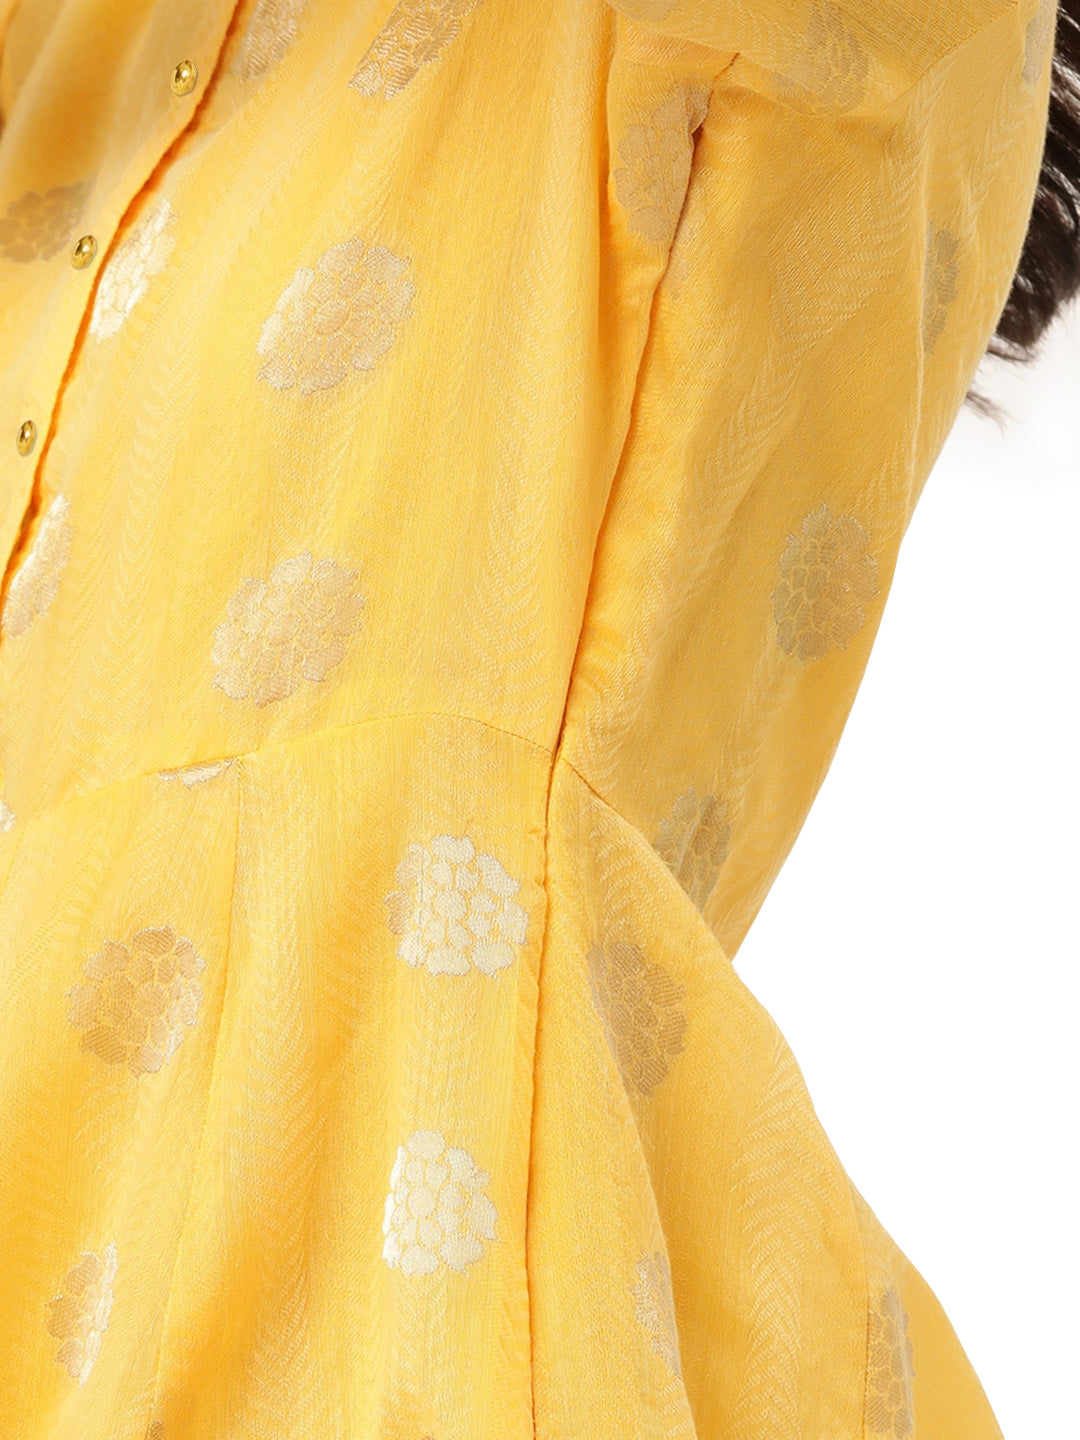 Women's Yellow Chanderi Jacquard Woven Dress - Ahalyaa